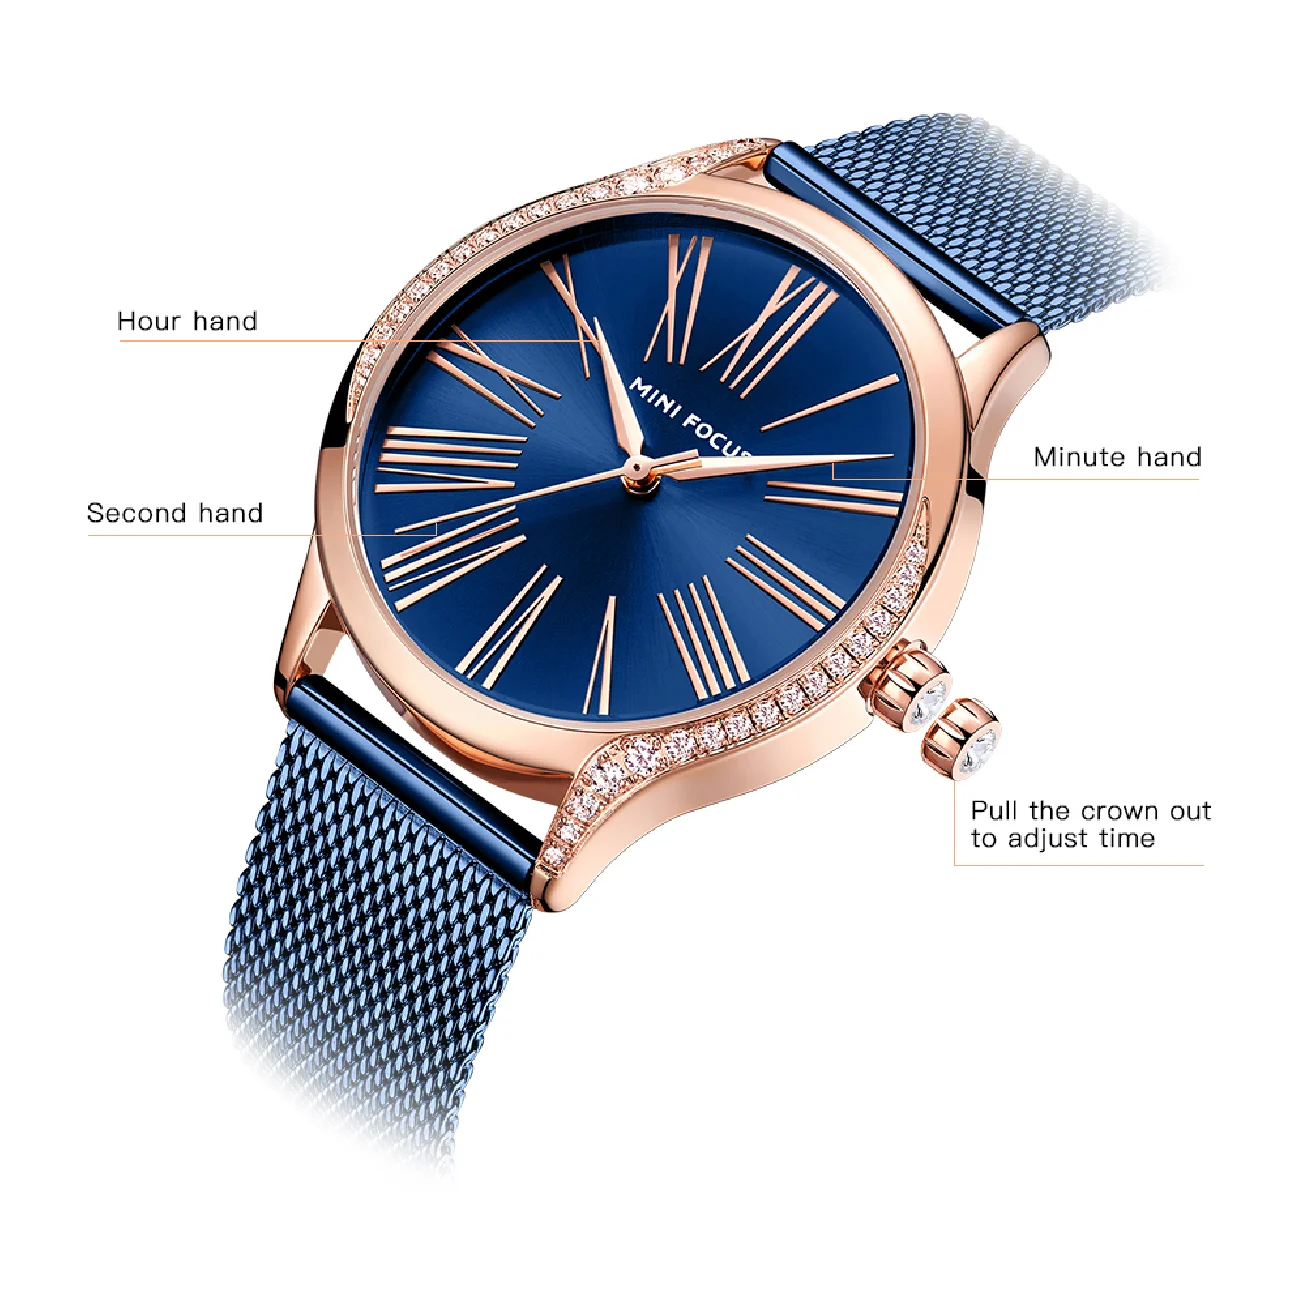 MINI FOCUS Women Watches Luxury Brand Quartz Watch Womens Fashion Casual Dress Simple Watch Waterproof Ladies Clock Reloj Mujer enlarge